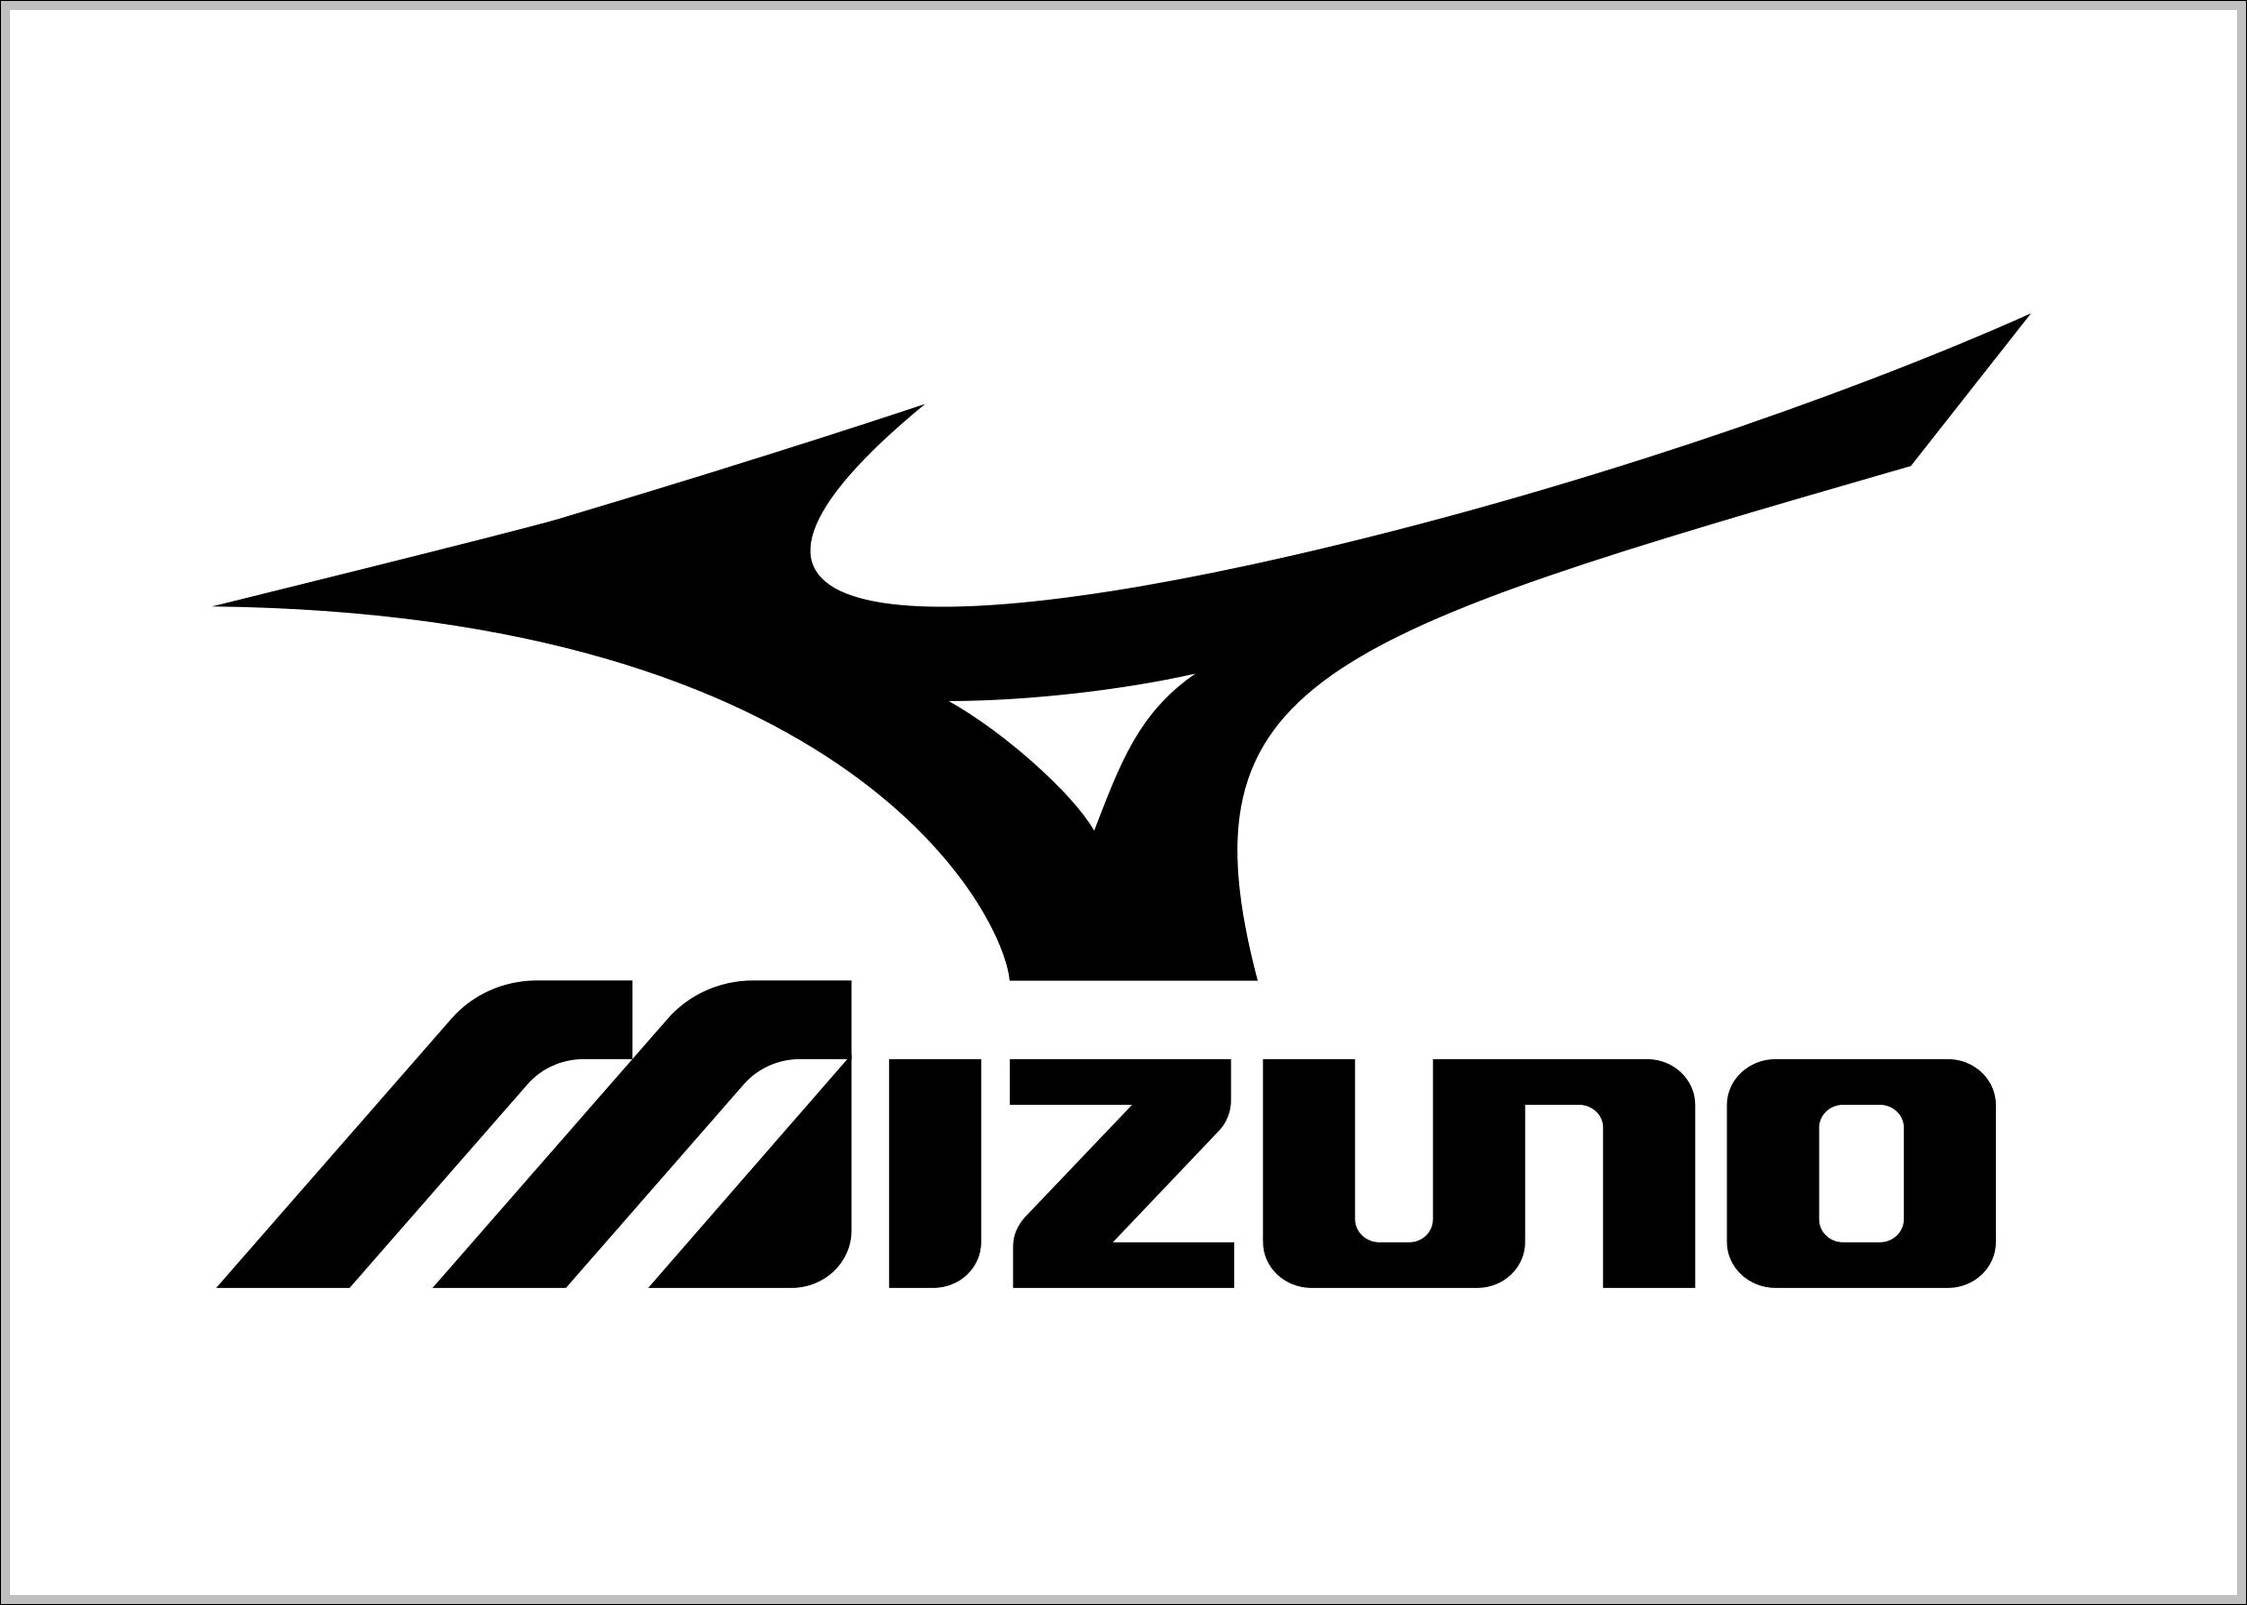 Mizuno sign